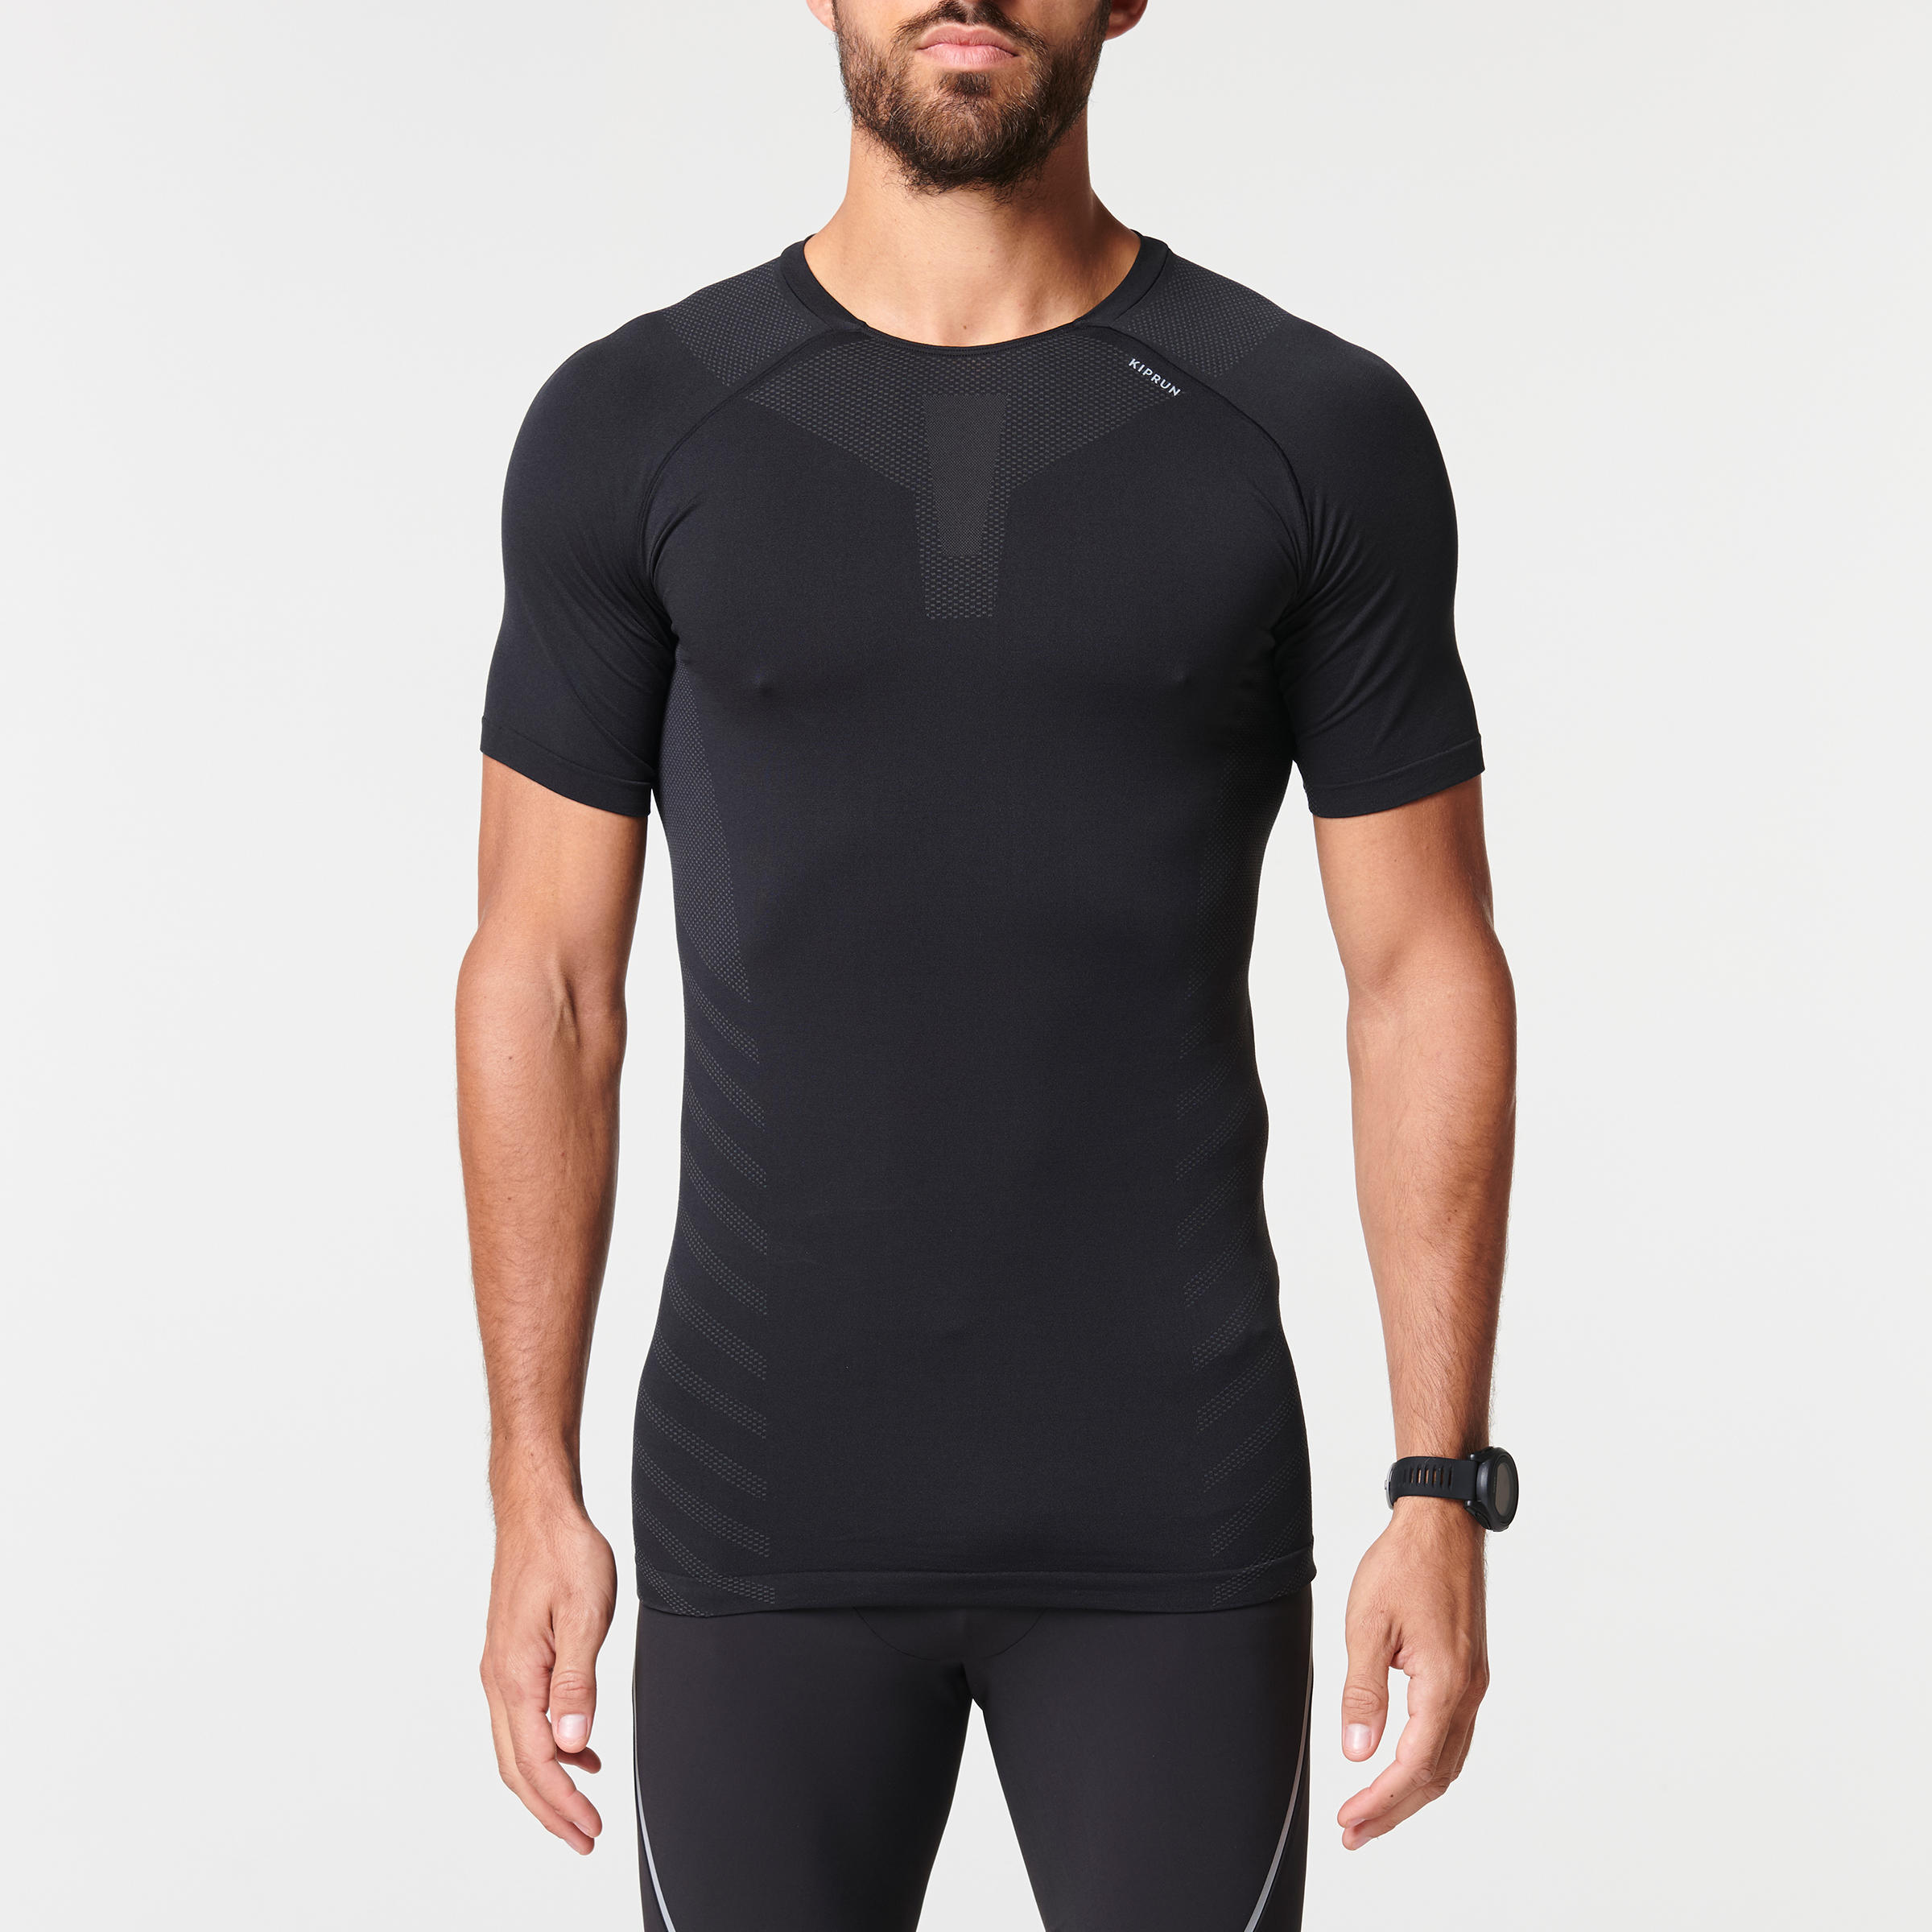 Men's Compression T-Shirt - 500 - smoked black, Deep khaki - Domyos -  Decathlon